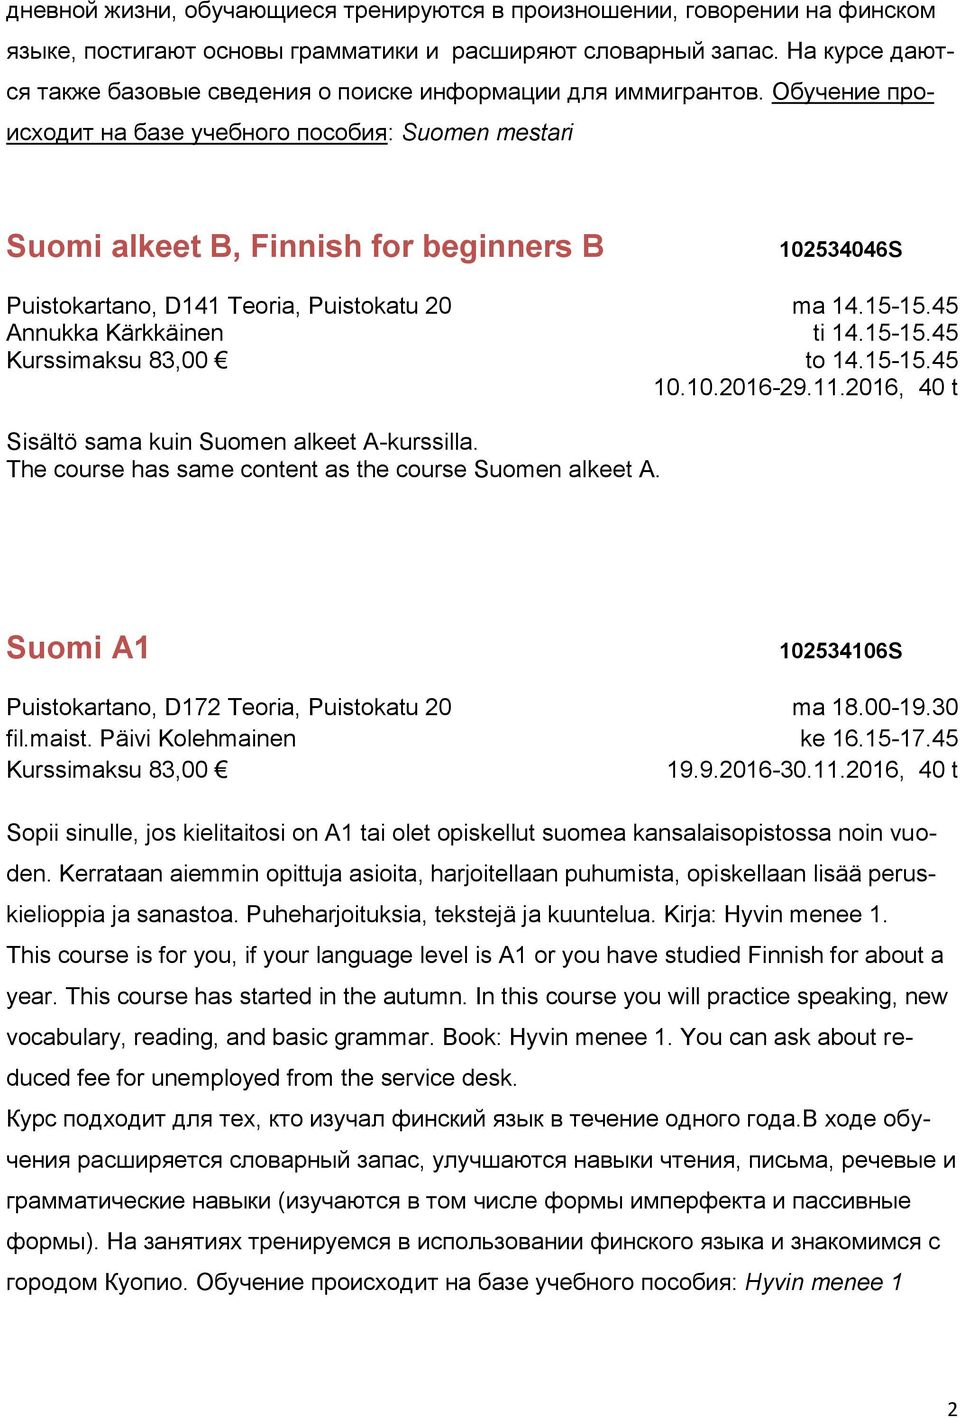 45 ti 14.15-15.45 to 14.15-15.45 10.10.2016-29.11.2016, 40 t Sisältö sama kuin Suomen alkeet A-kurssilla. The course has same content as the course Suomen alkeet A. Suomi A1 fil.maist.